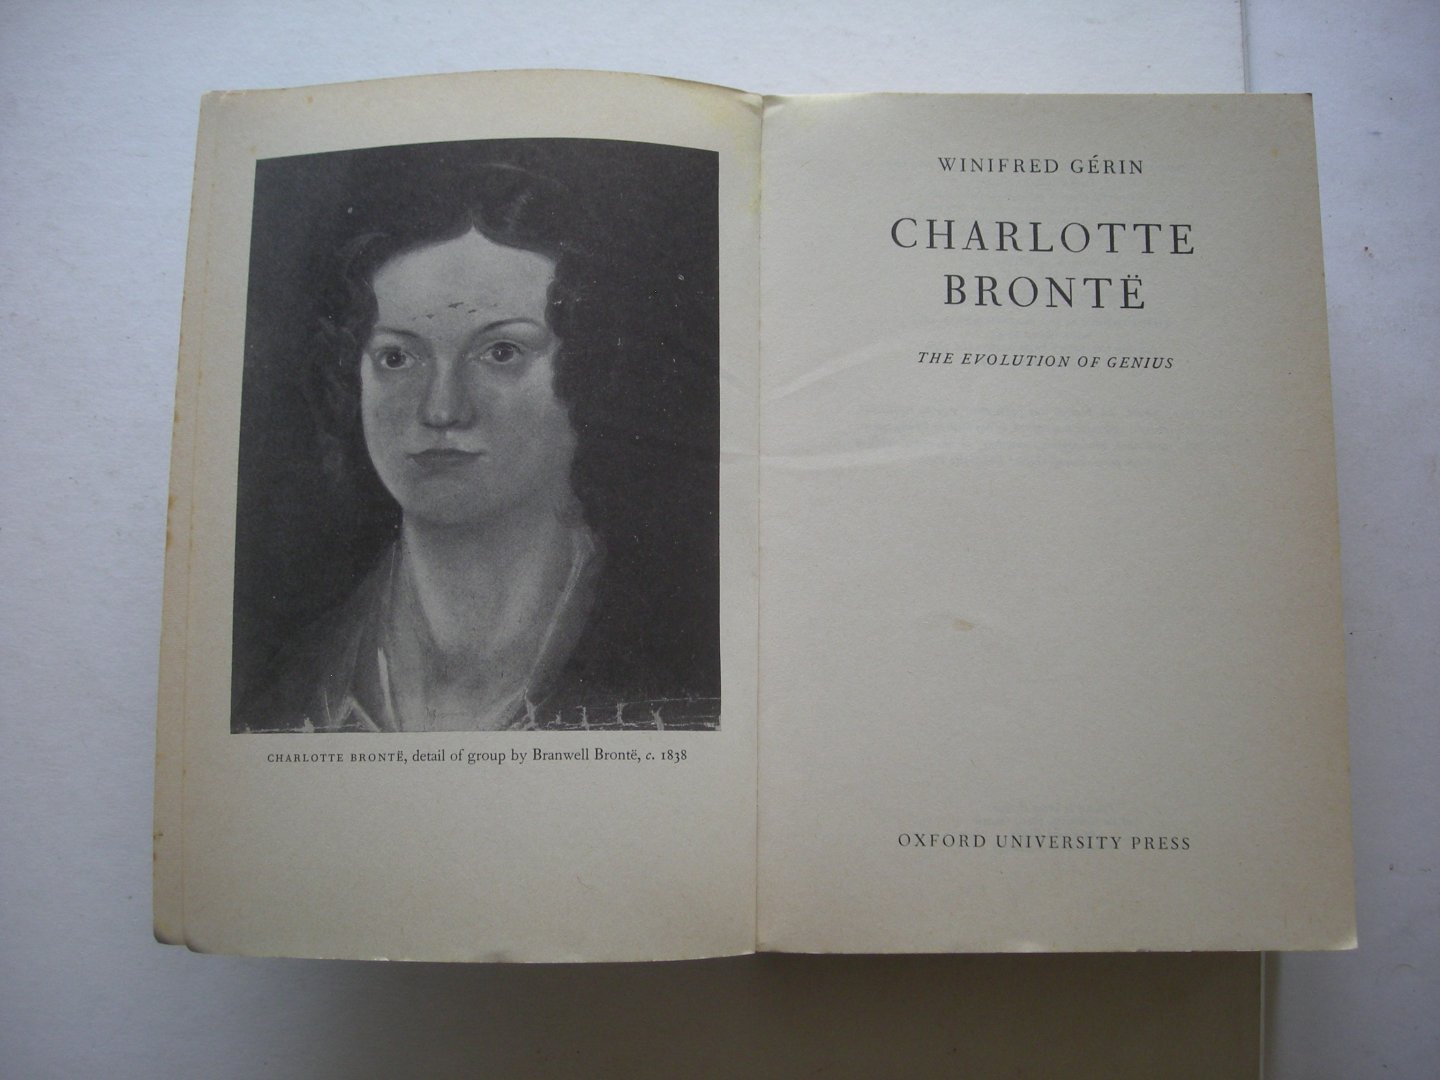 Gerin, Winifred - Charlotte Bronte. The Evolution of Genius